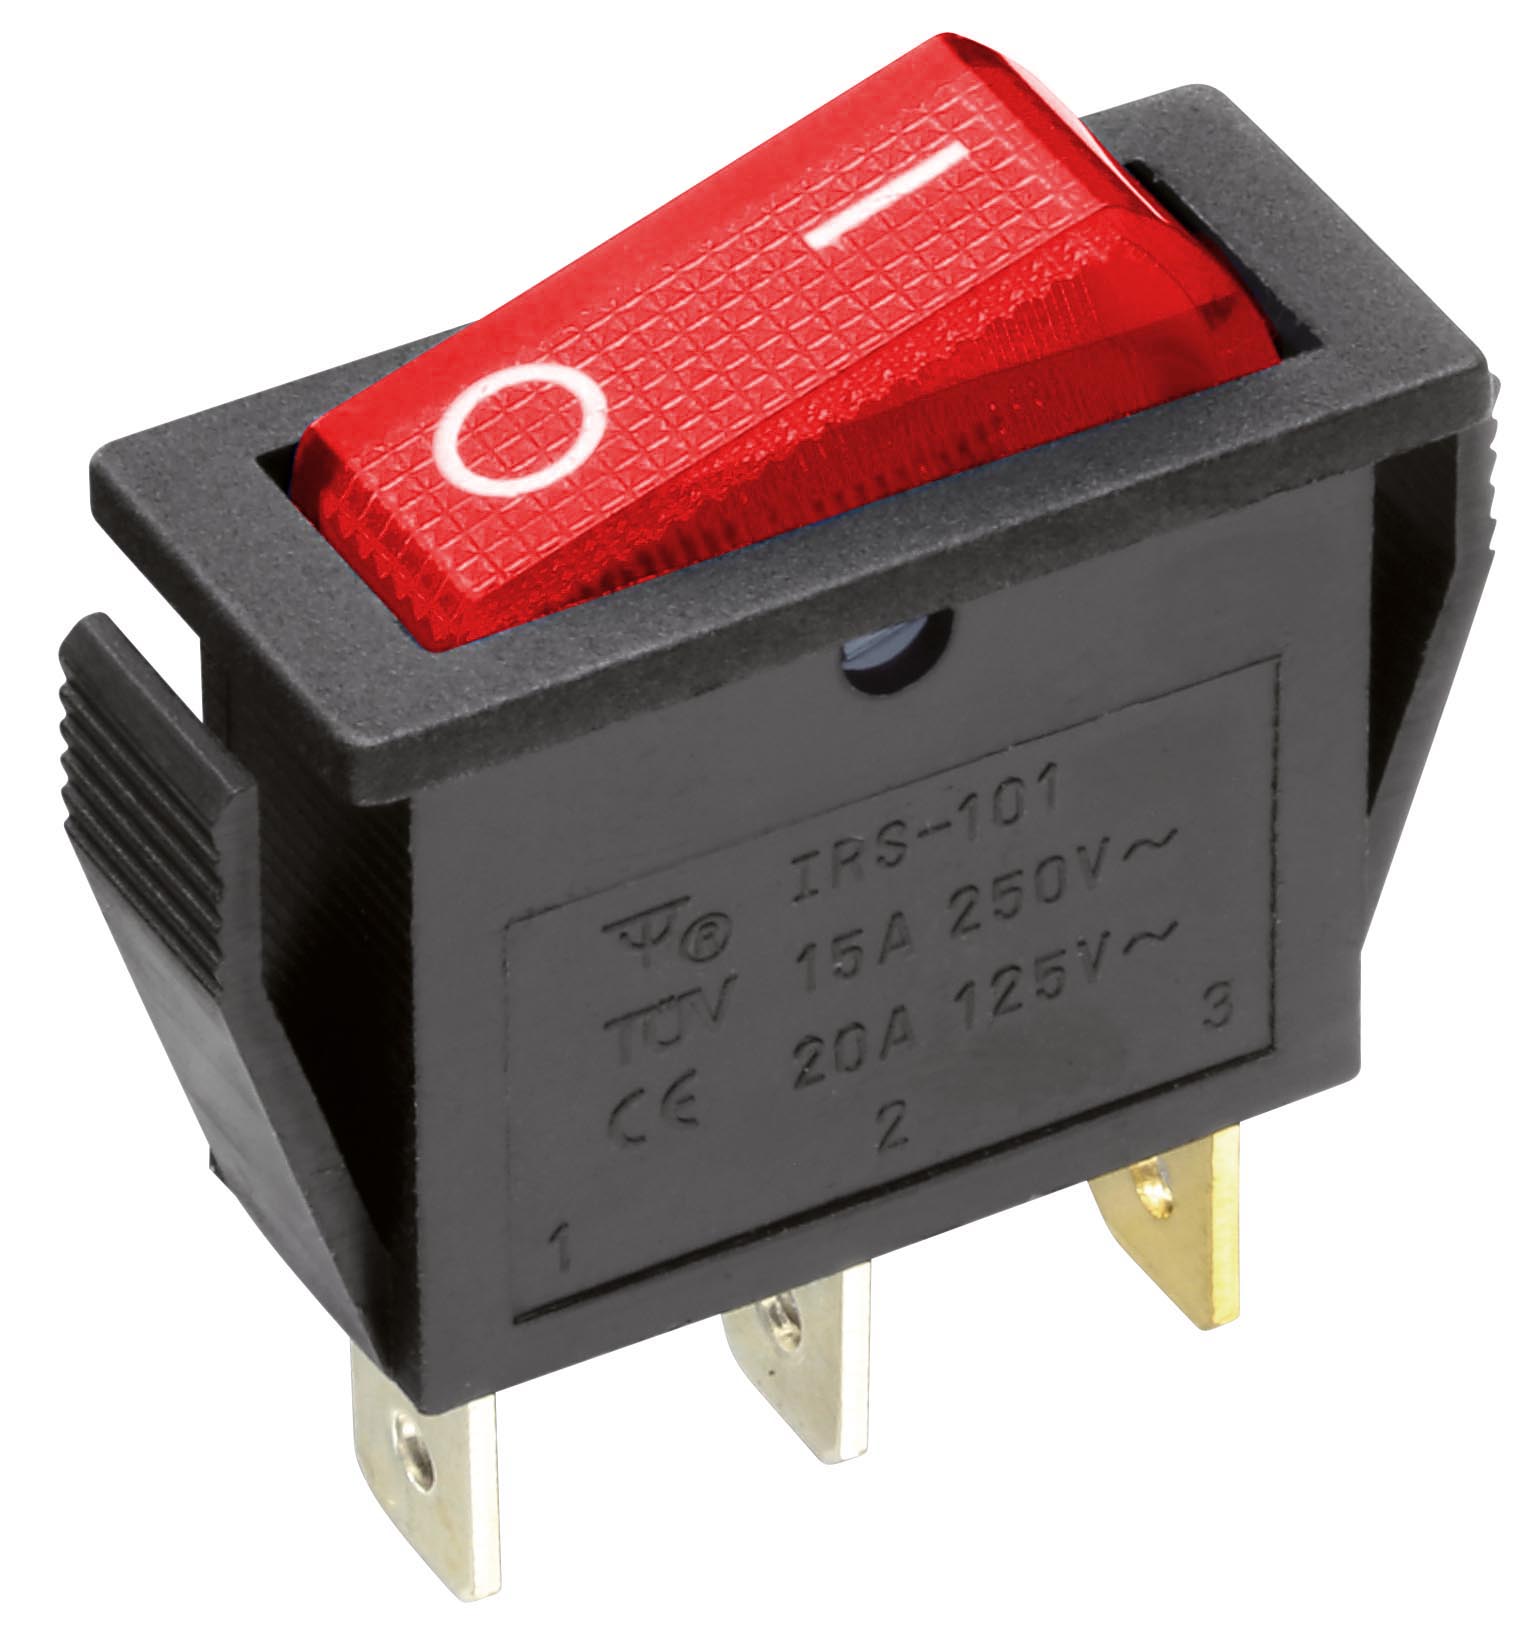 Netzschalter Schalter mini Wippschalter 250V - 3A on/off Switch